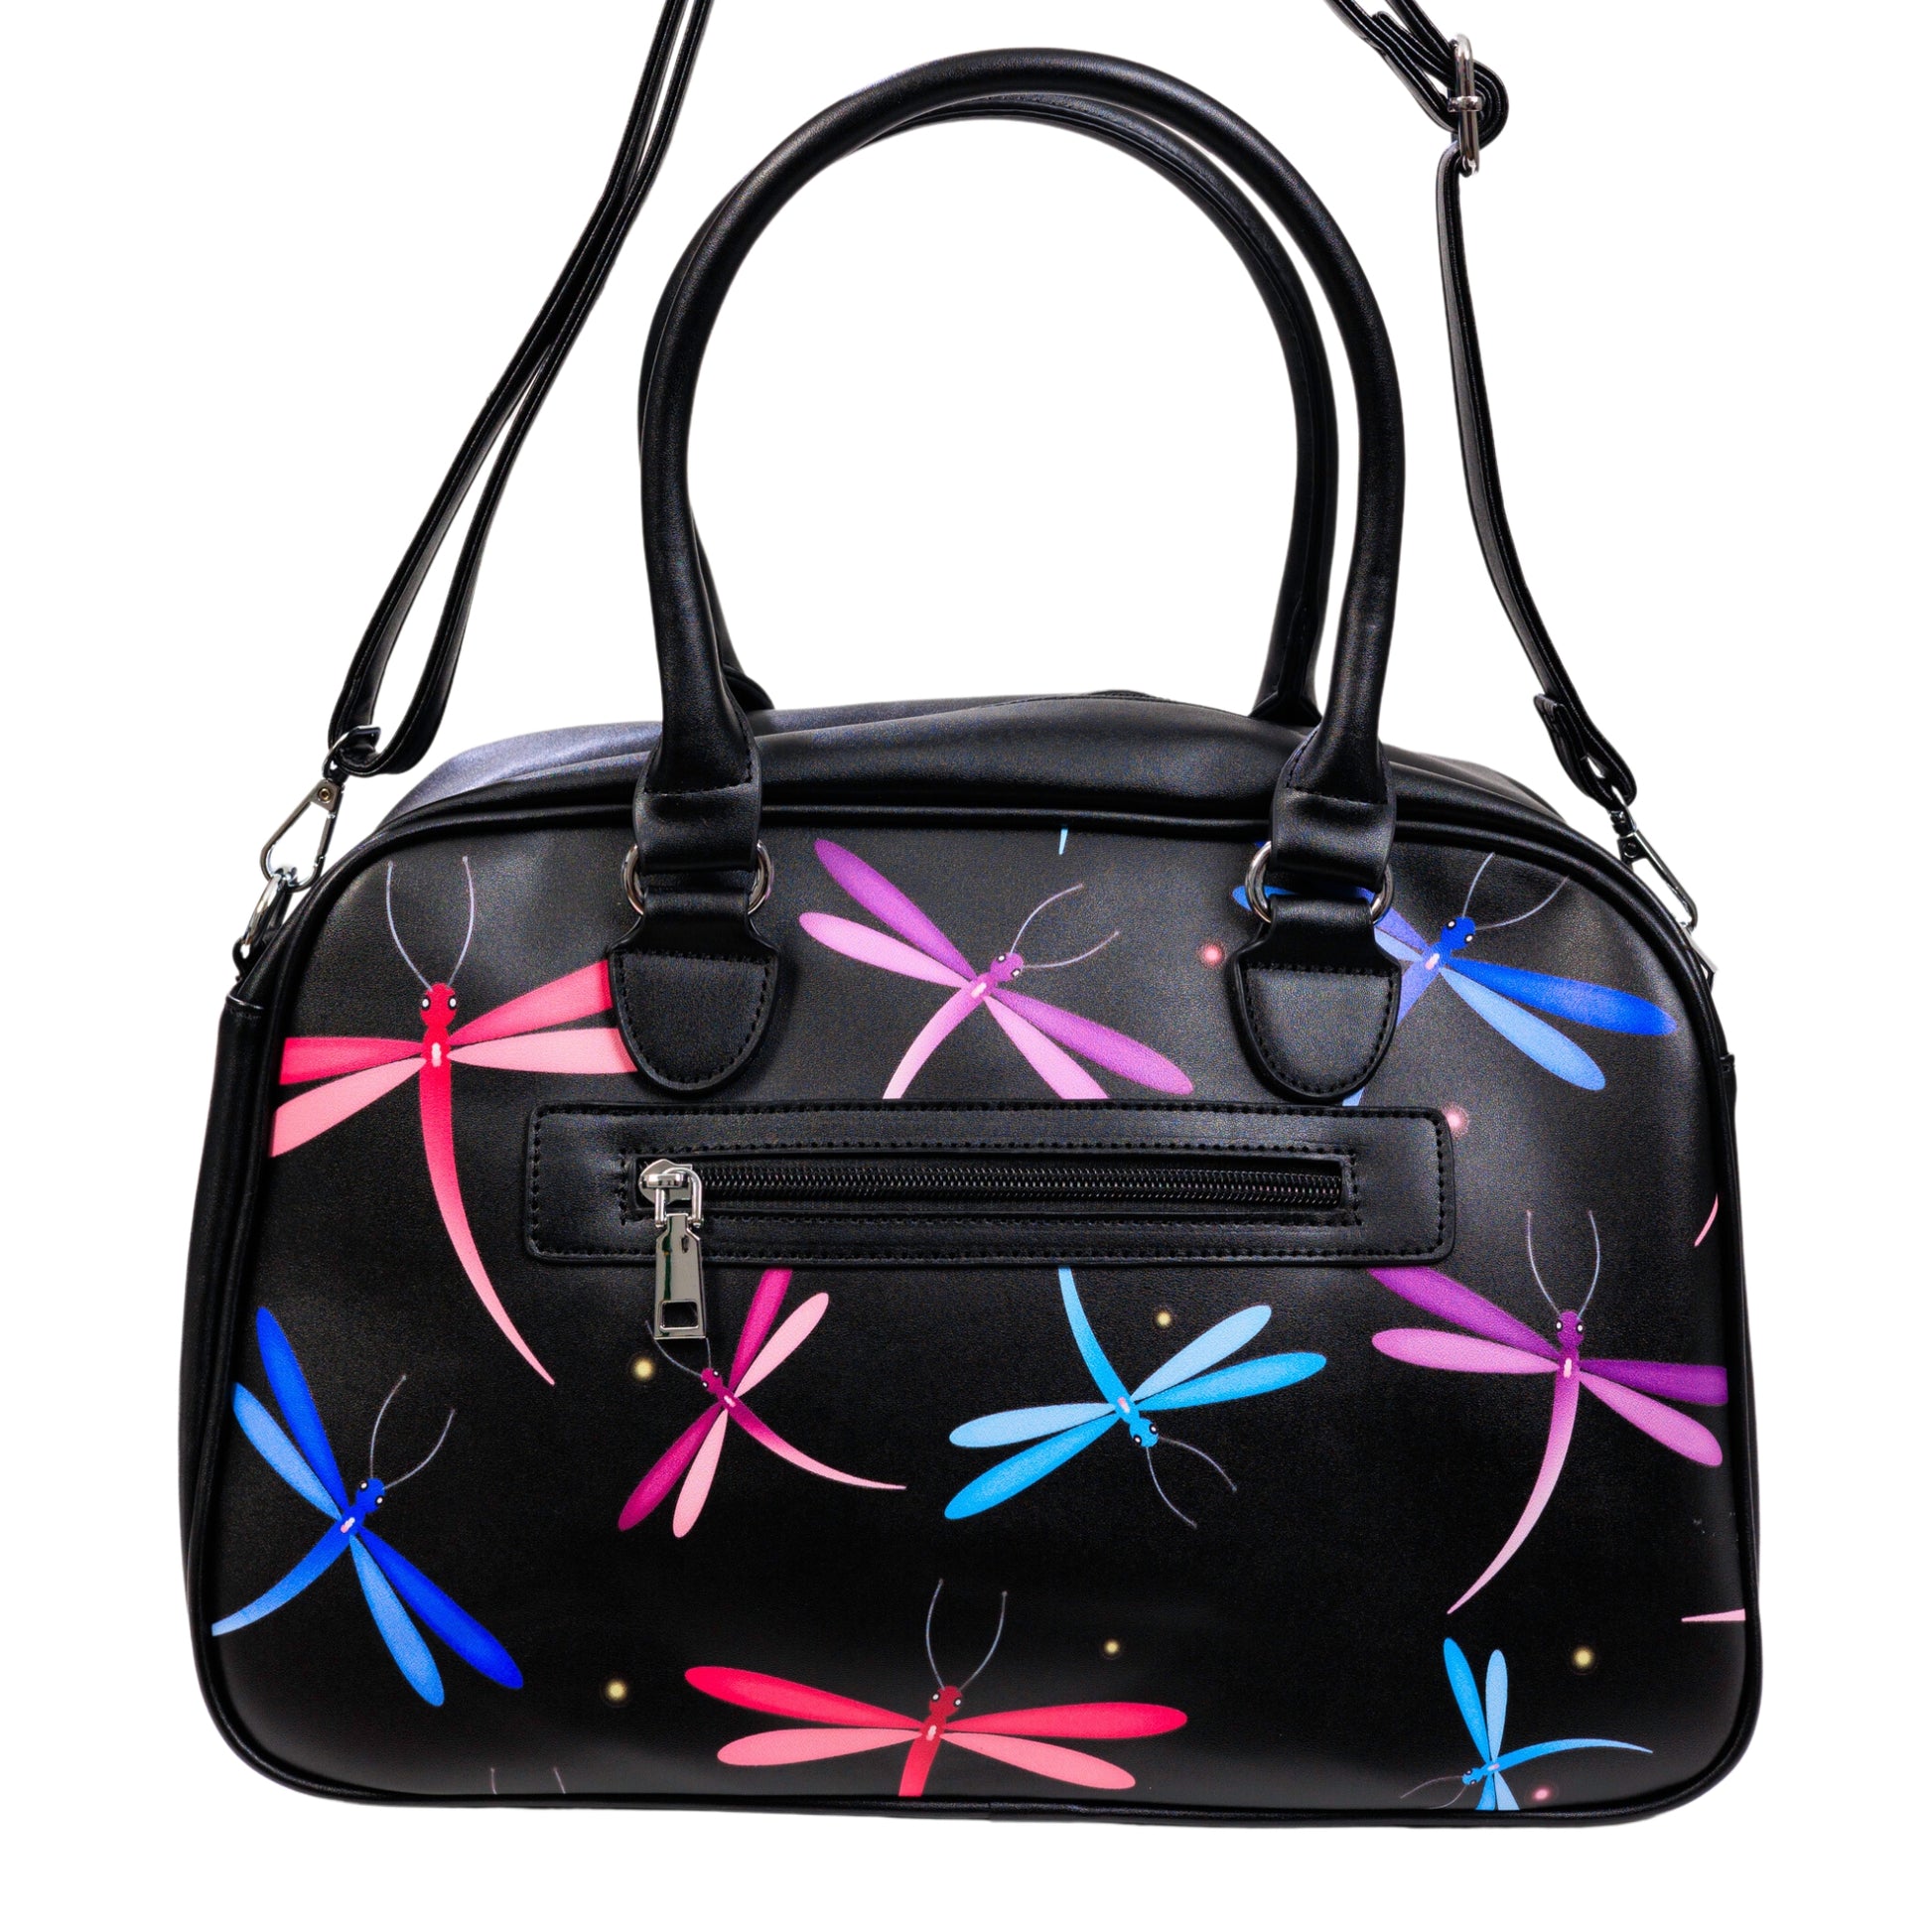 Midnight Dreaming Bowler Bag by RainbowsAndFairies.com (Dragonfly - Pink & Purple - Butterfly - Kitsch - Bowler Style - Bowling Bag - Handbag - Vintage Inspired - Rockabilly) - SKU: BG_BOWLR_DREAM_MID - Pic 04